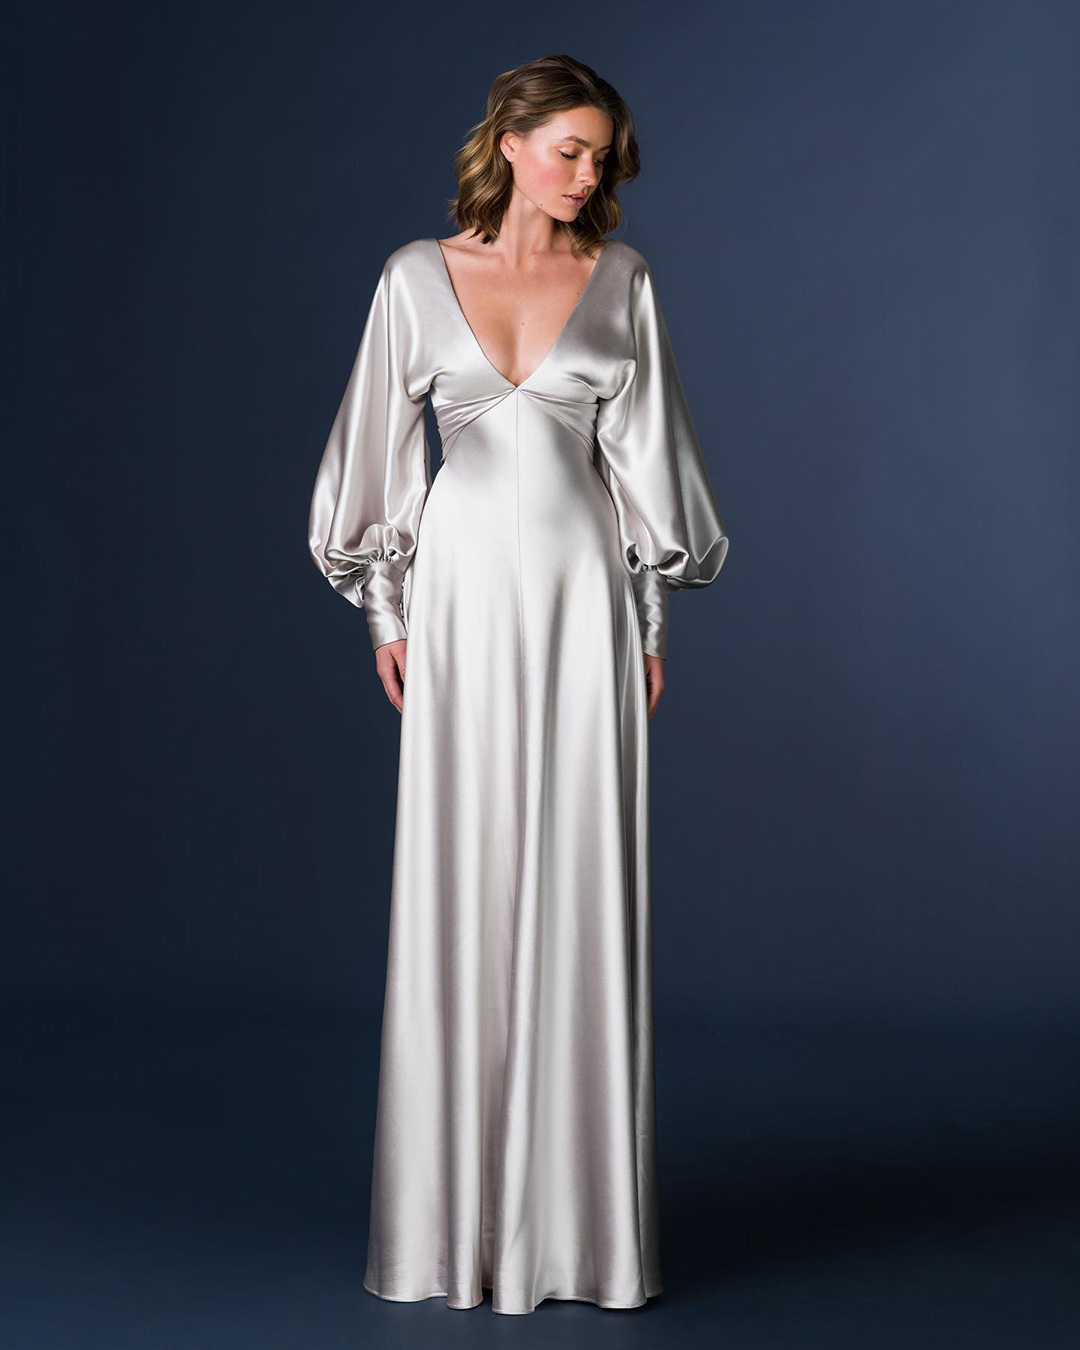 greek wedding dresses simple with long sleeves paolo sebastien